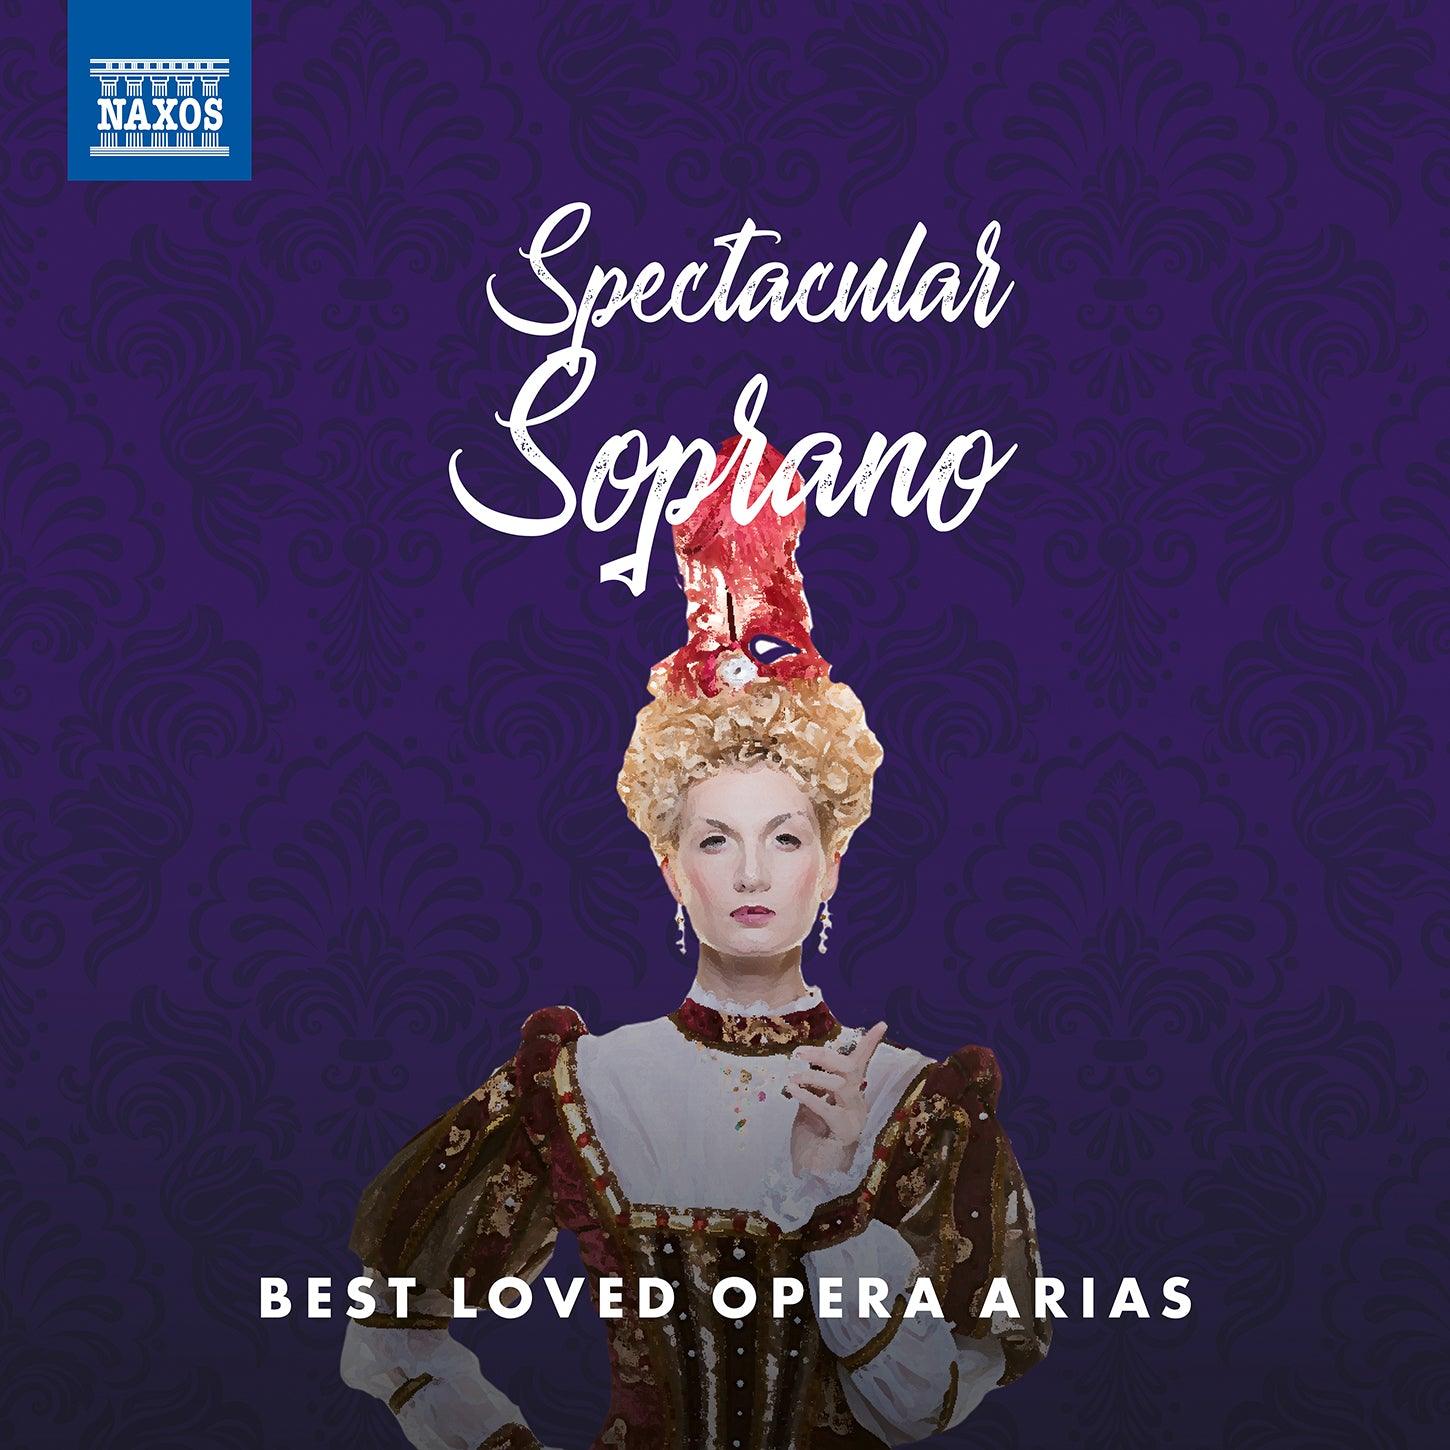 Mozart, Puccini, Verdi et al.: Spectacular Soprano / Kwon, OrgonÃ¡Å¡ovÃ¡, Stella et al. - ArkivMusic